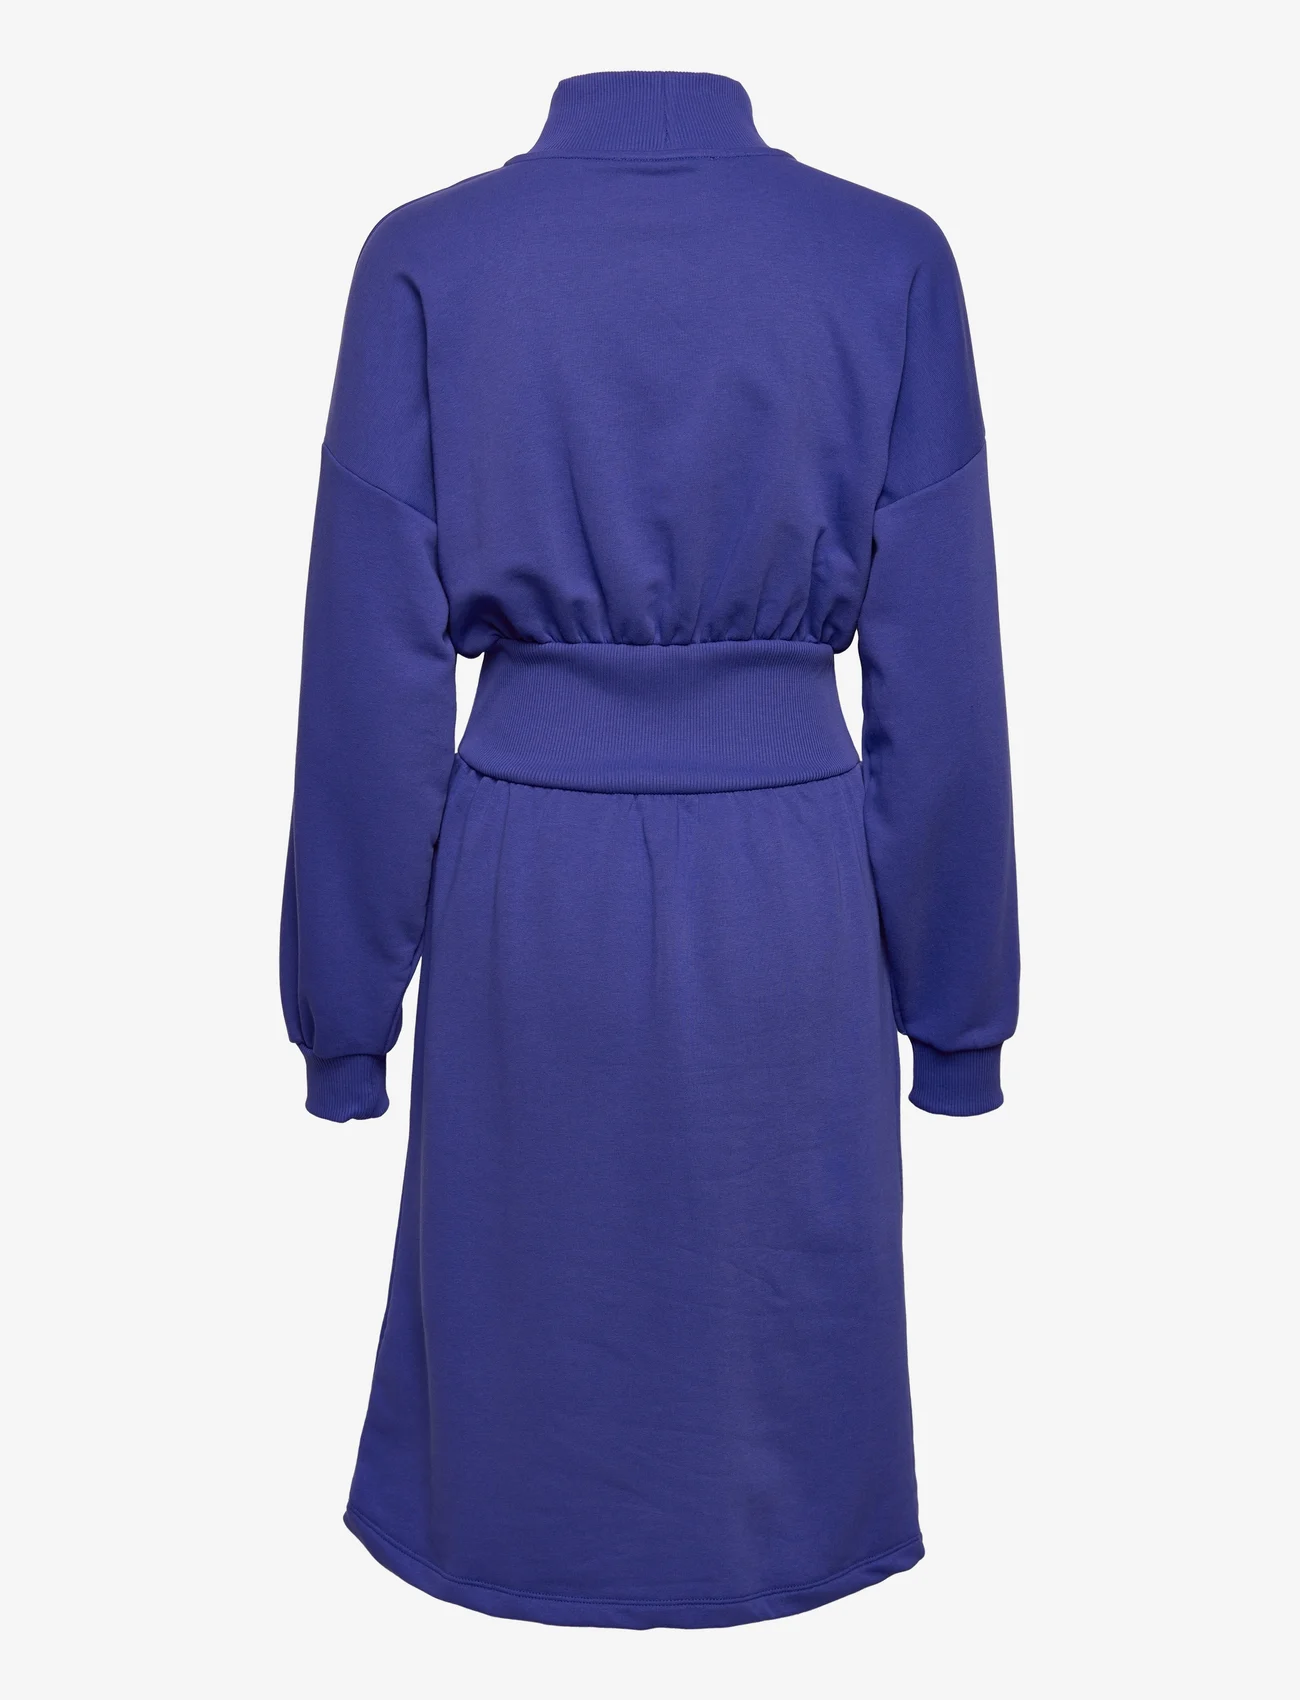 Minus - Halia Sweat Dress 1 - royal blue - 1